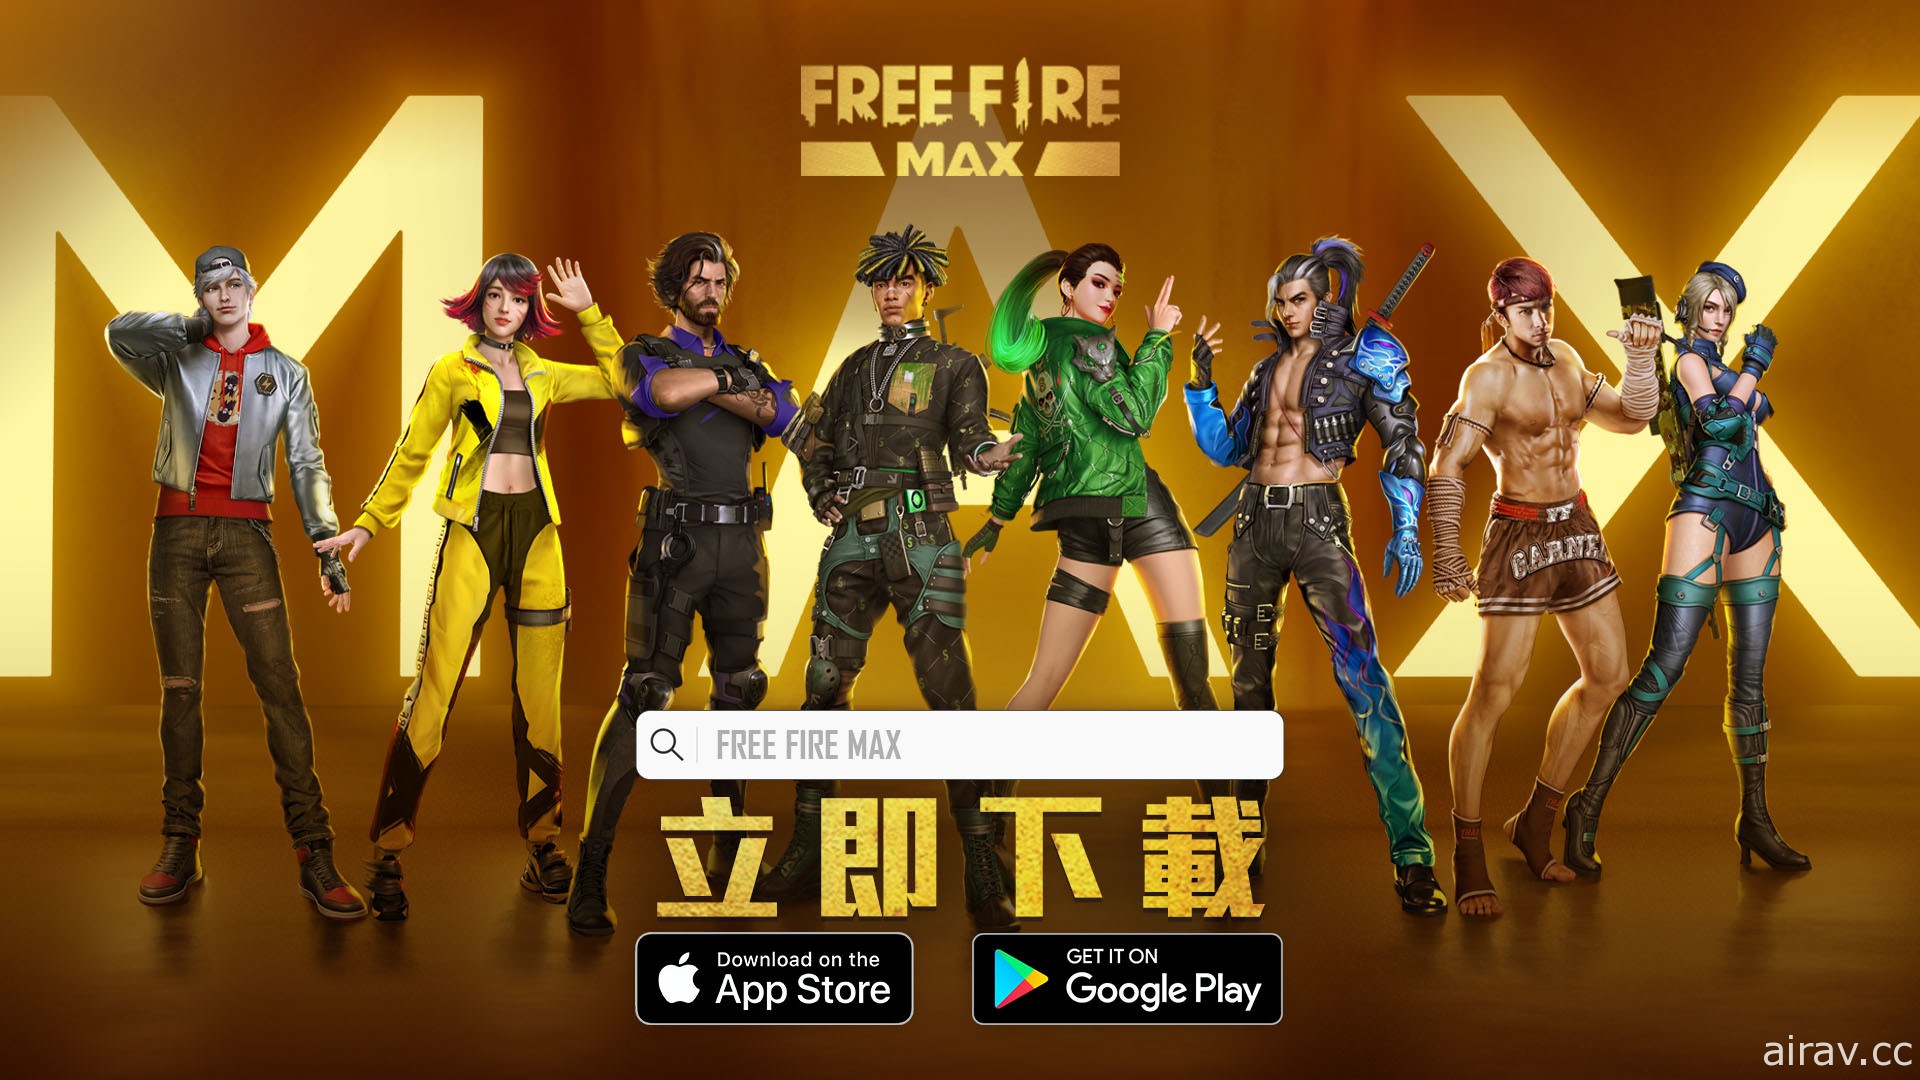 《Free Fire - 我要活下去》HD 高品質版本 Free Fire MAX 全球正式上線